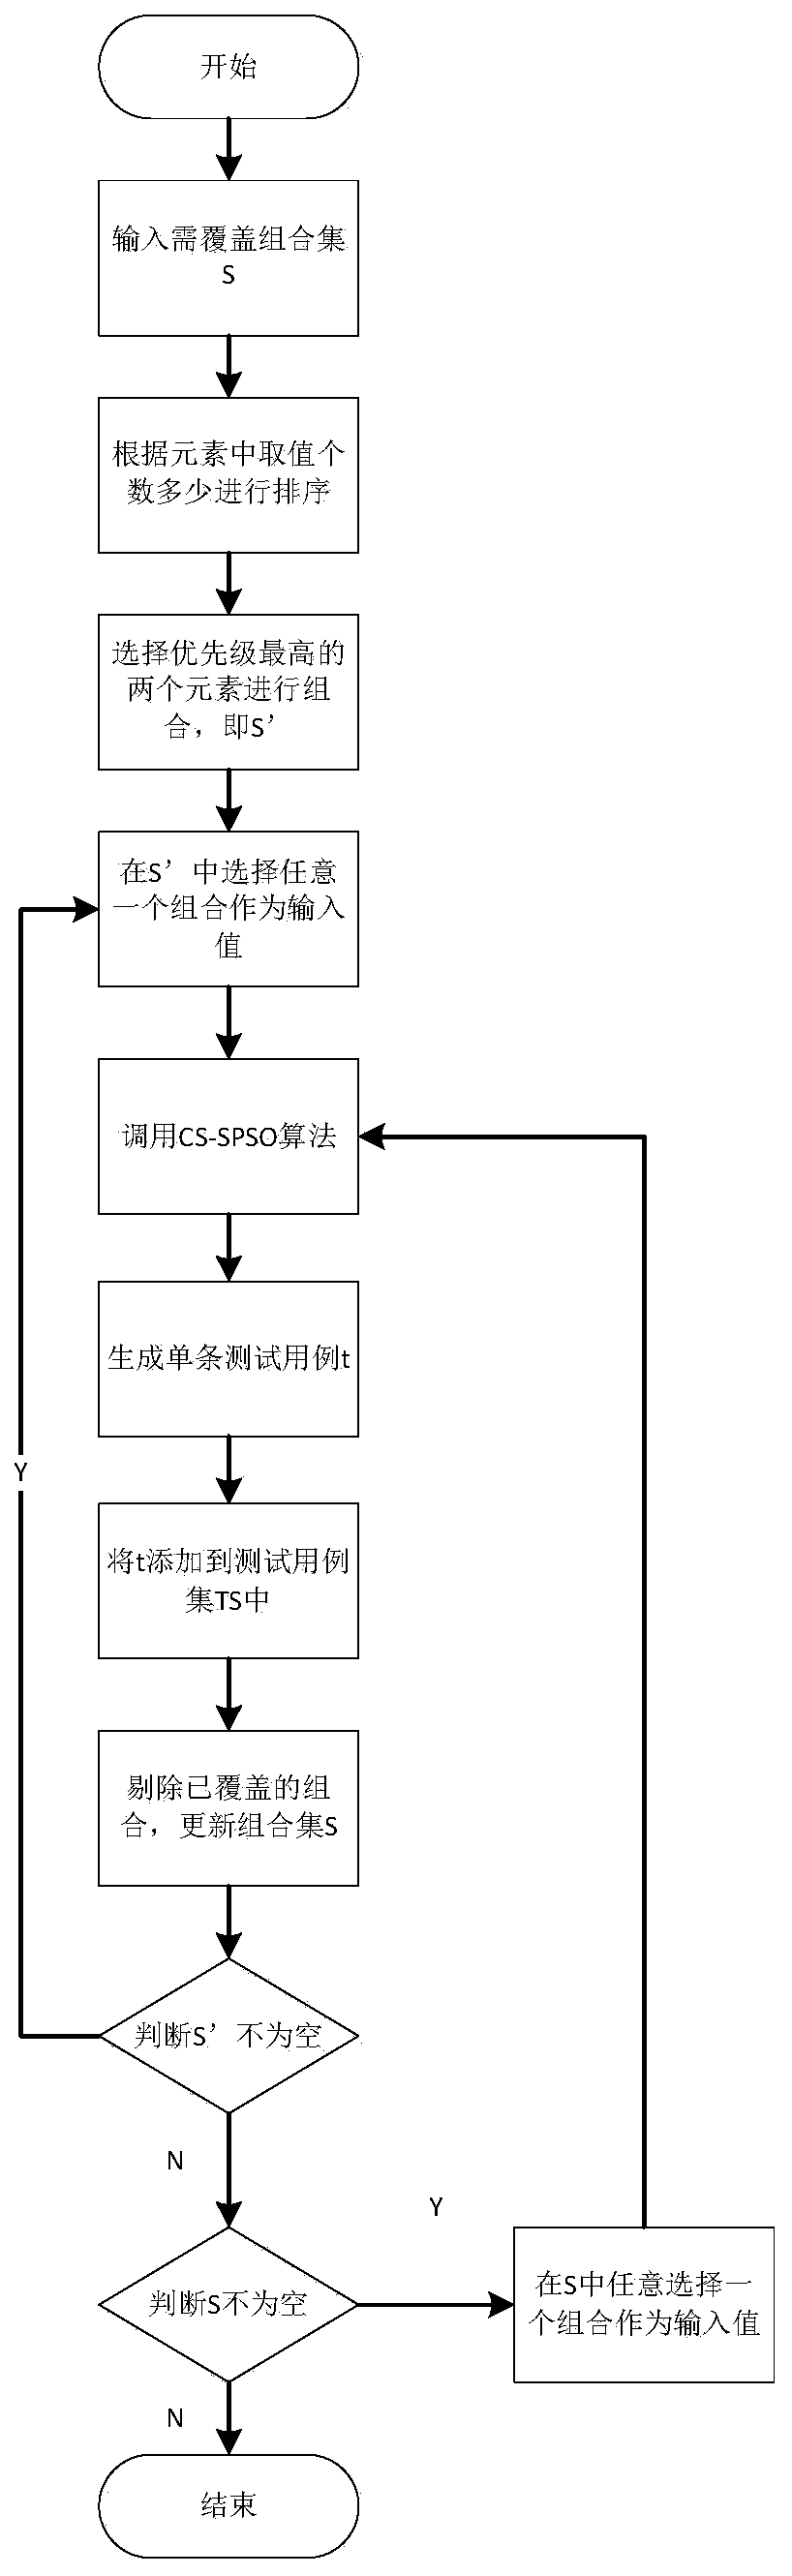 Combined test case generation method based on CS-SPSO algorithm